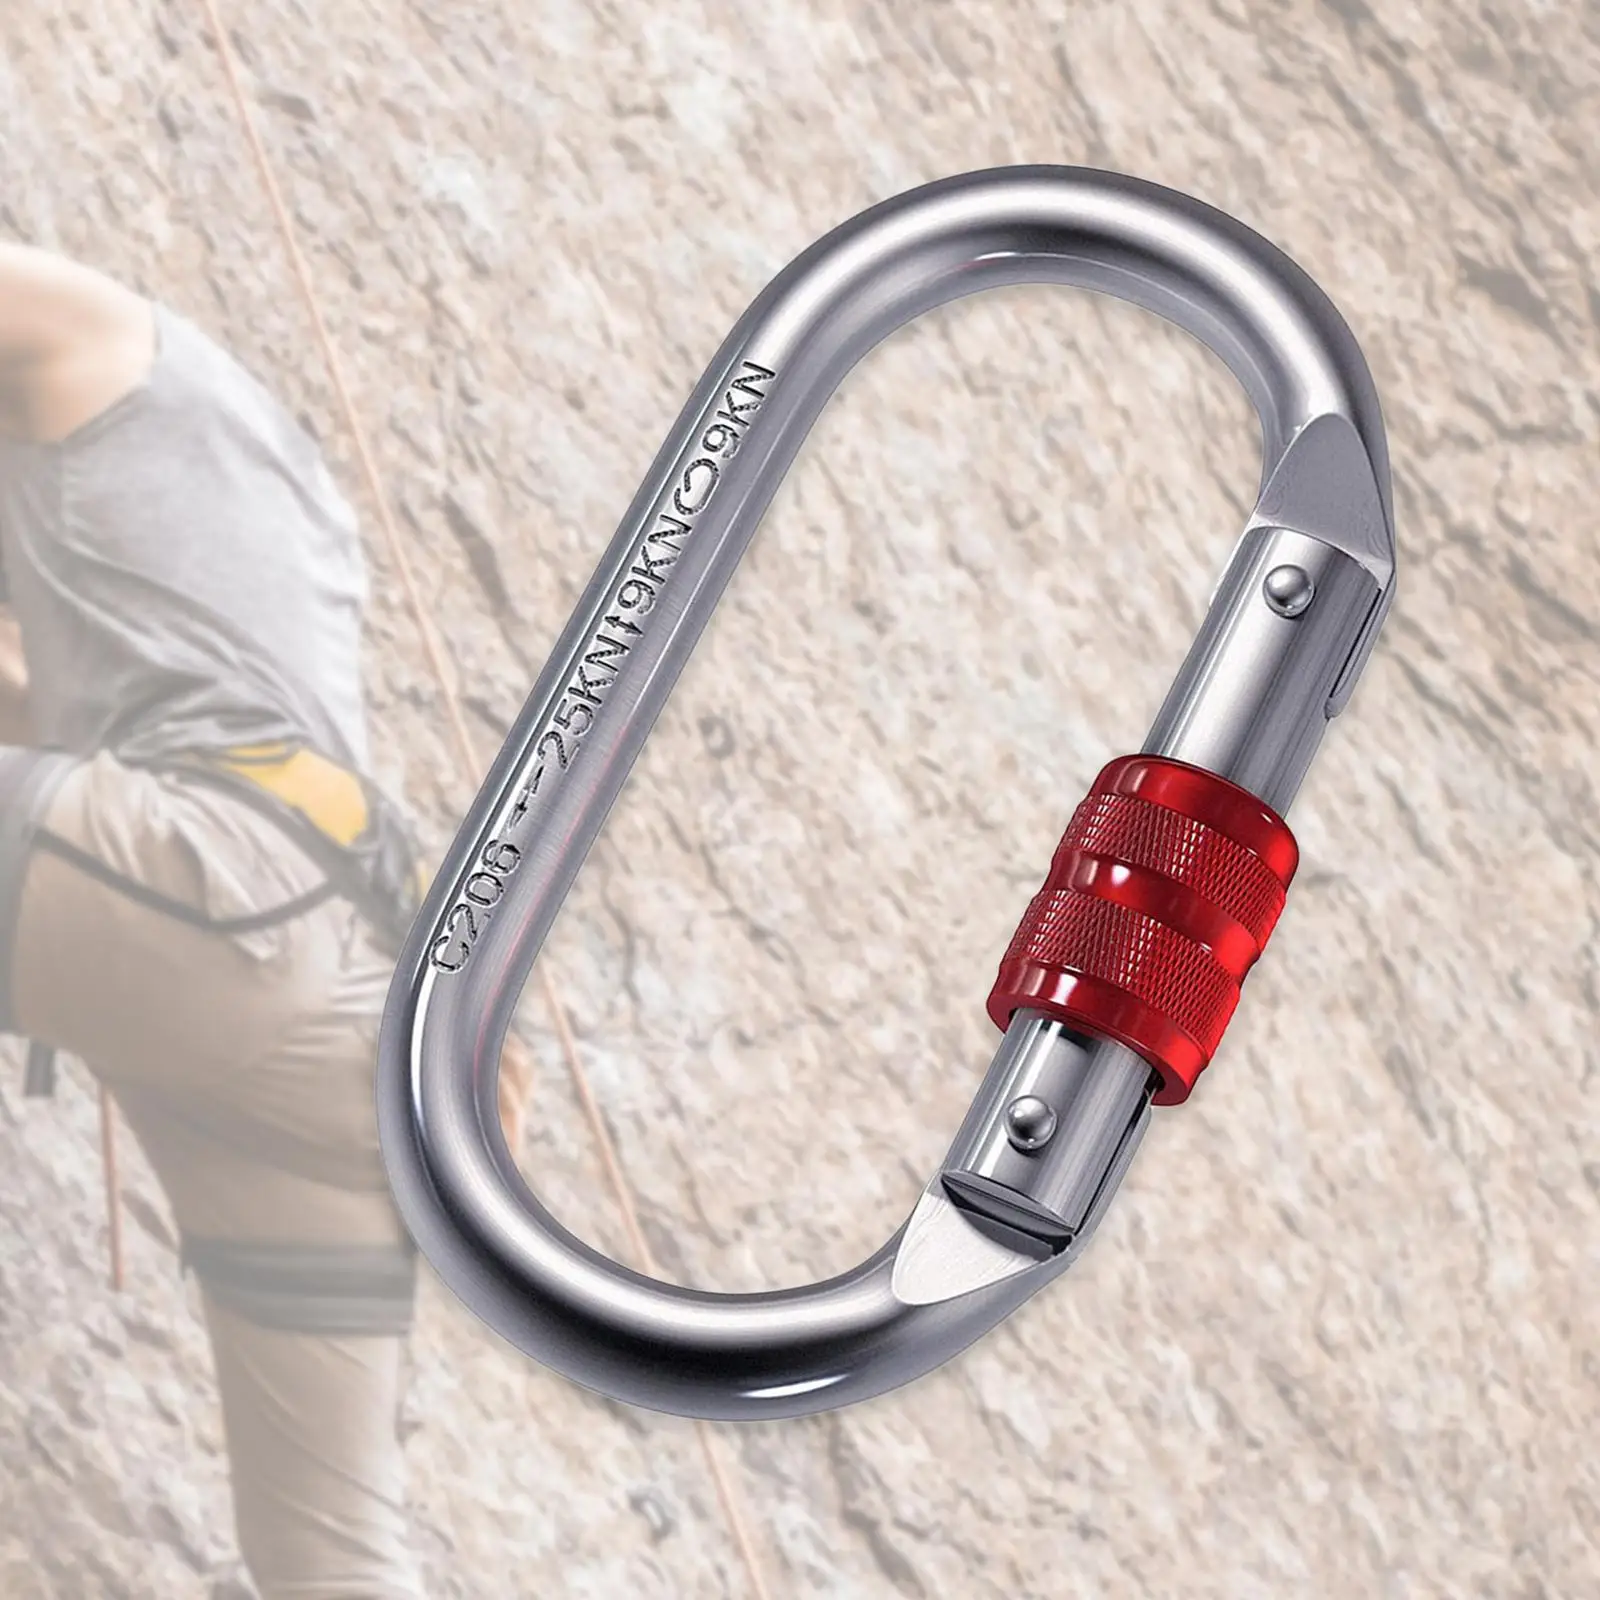 25kN Locking Carabiner Screw Lock Hook Screwgate Heavy Duty O Shaped Gear for Hiking Rock Climbing Rappelling Caving Ropes